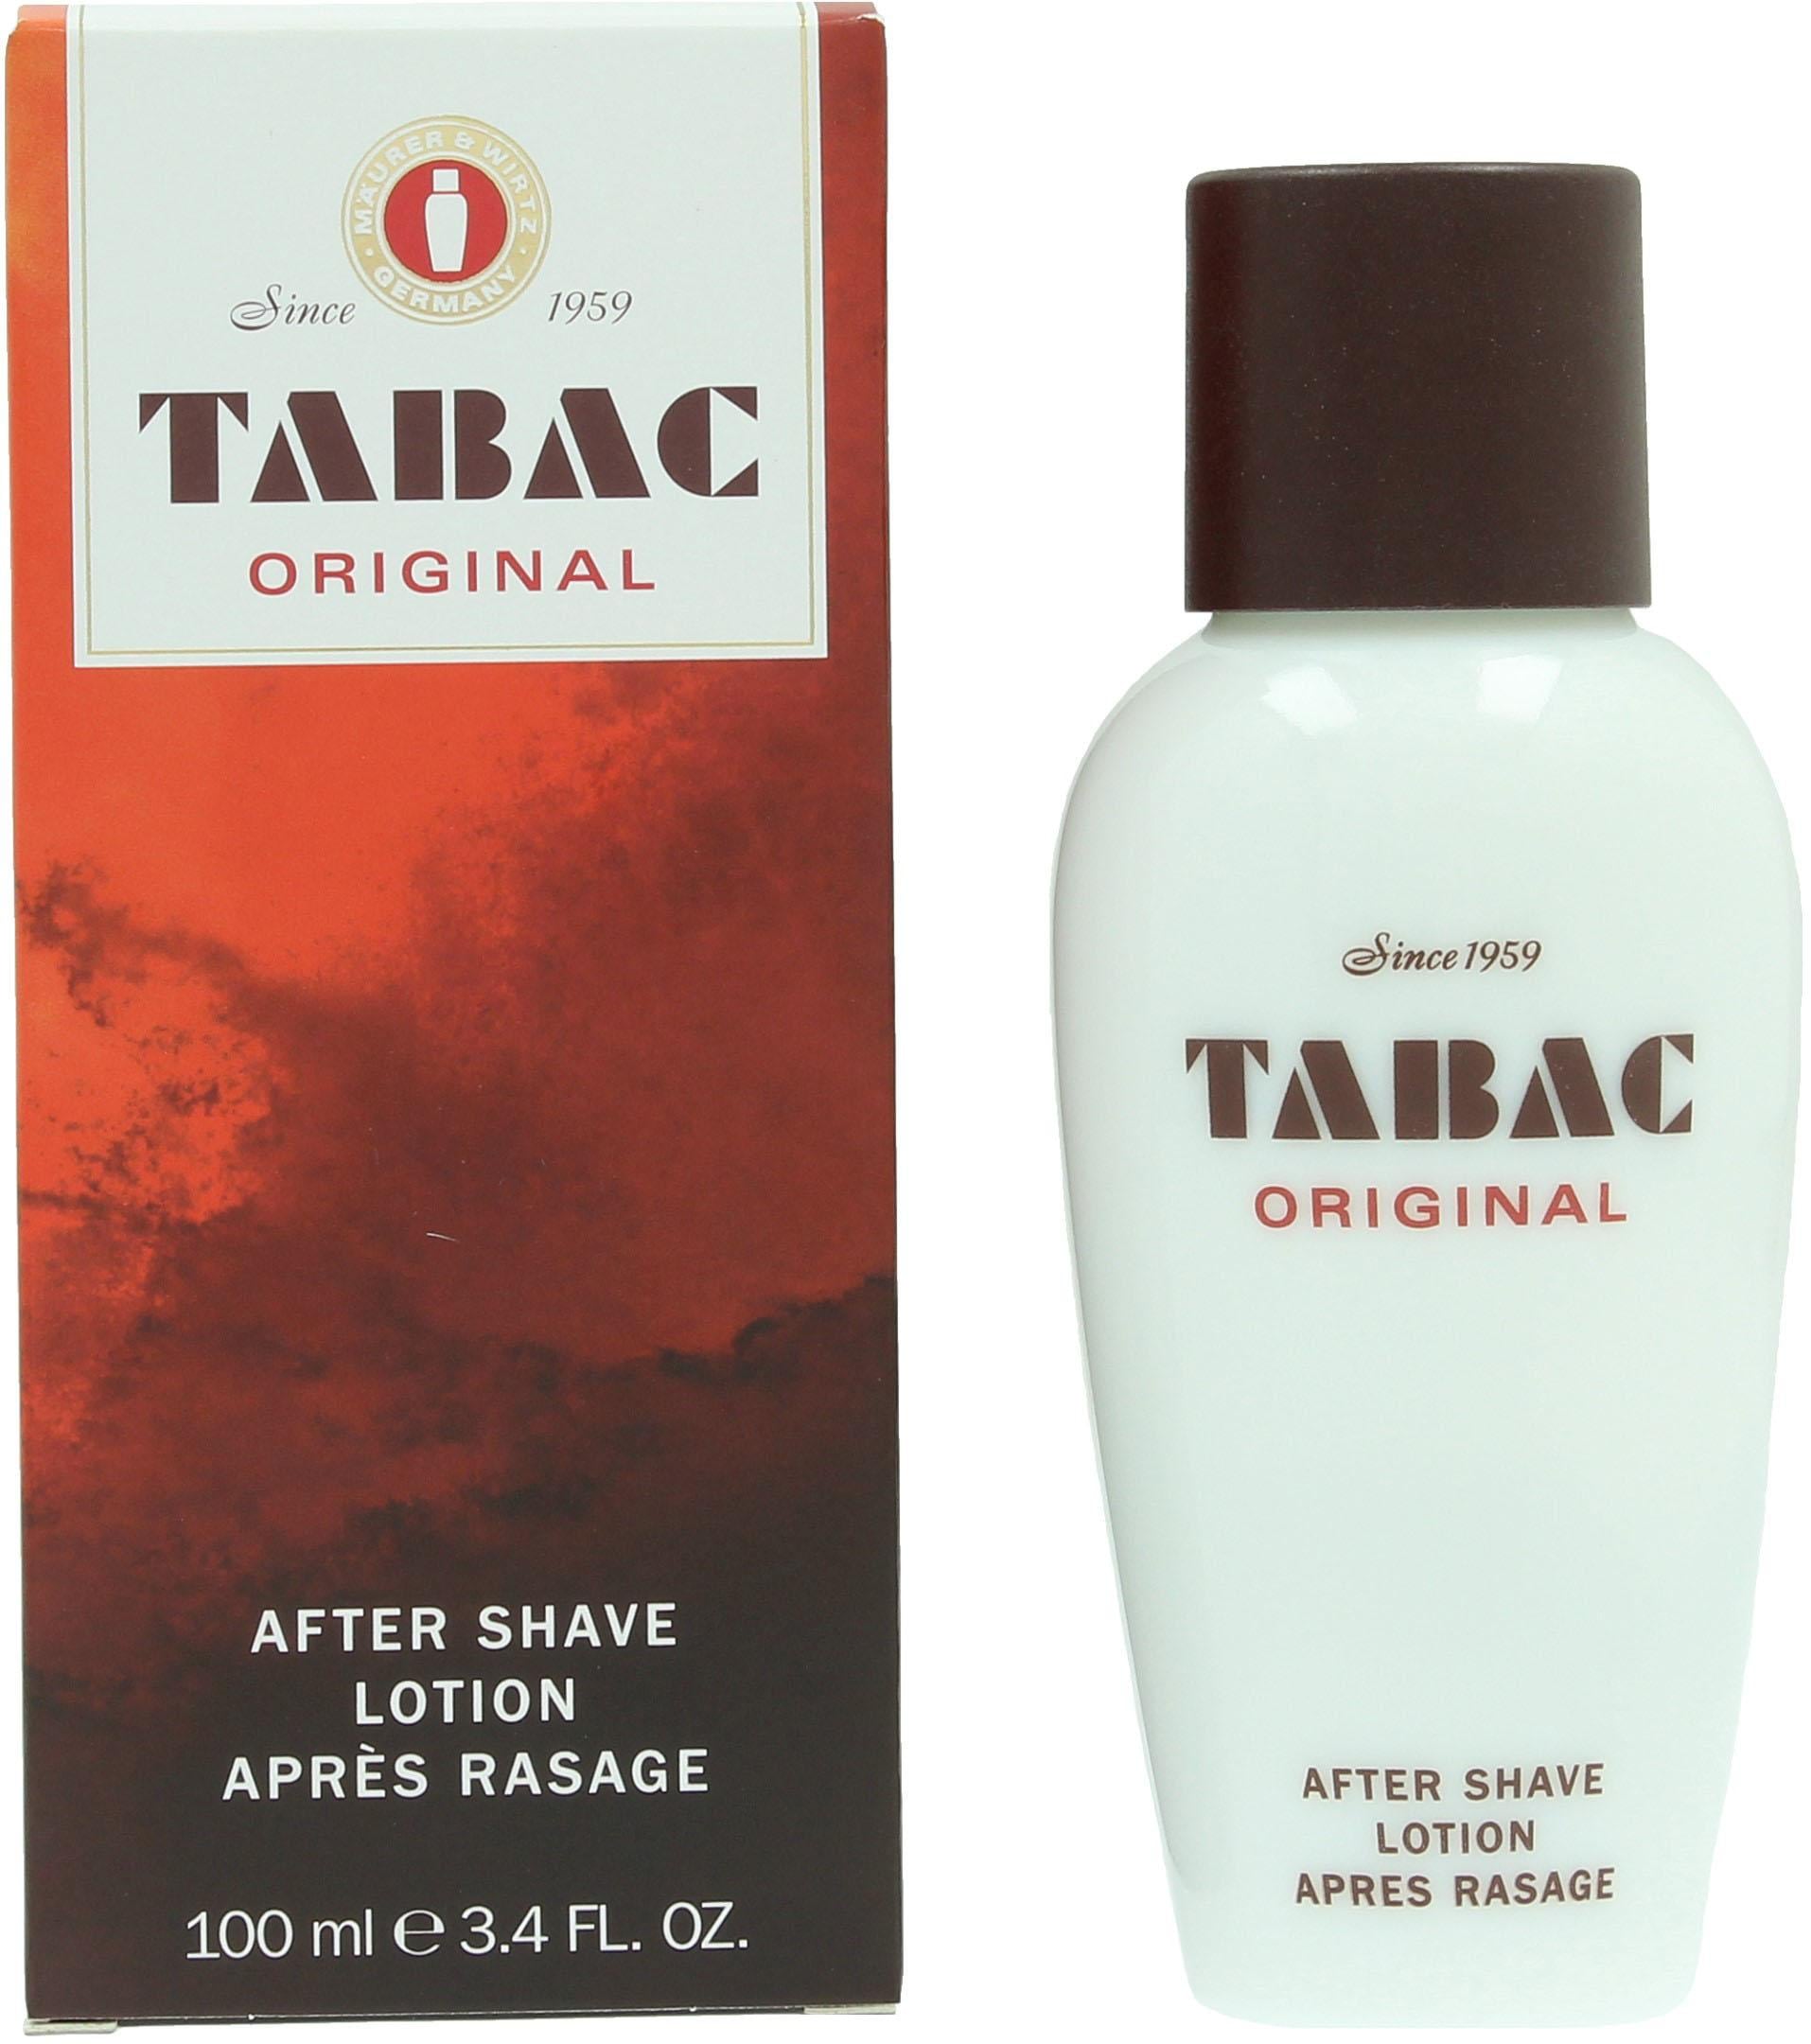 Tabac günstig Original kaufen After-Shave